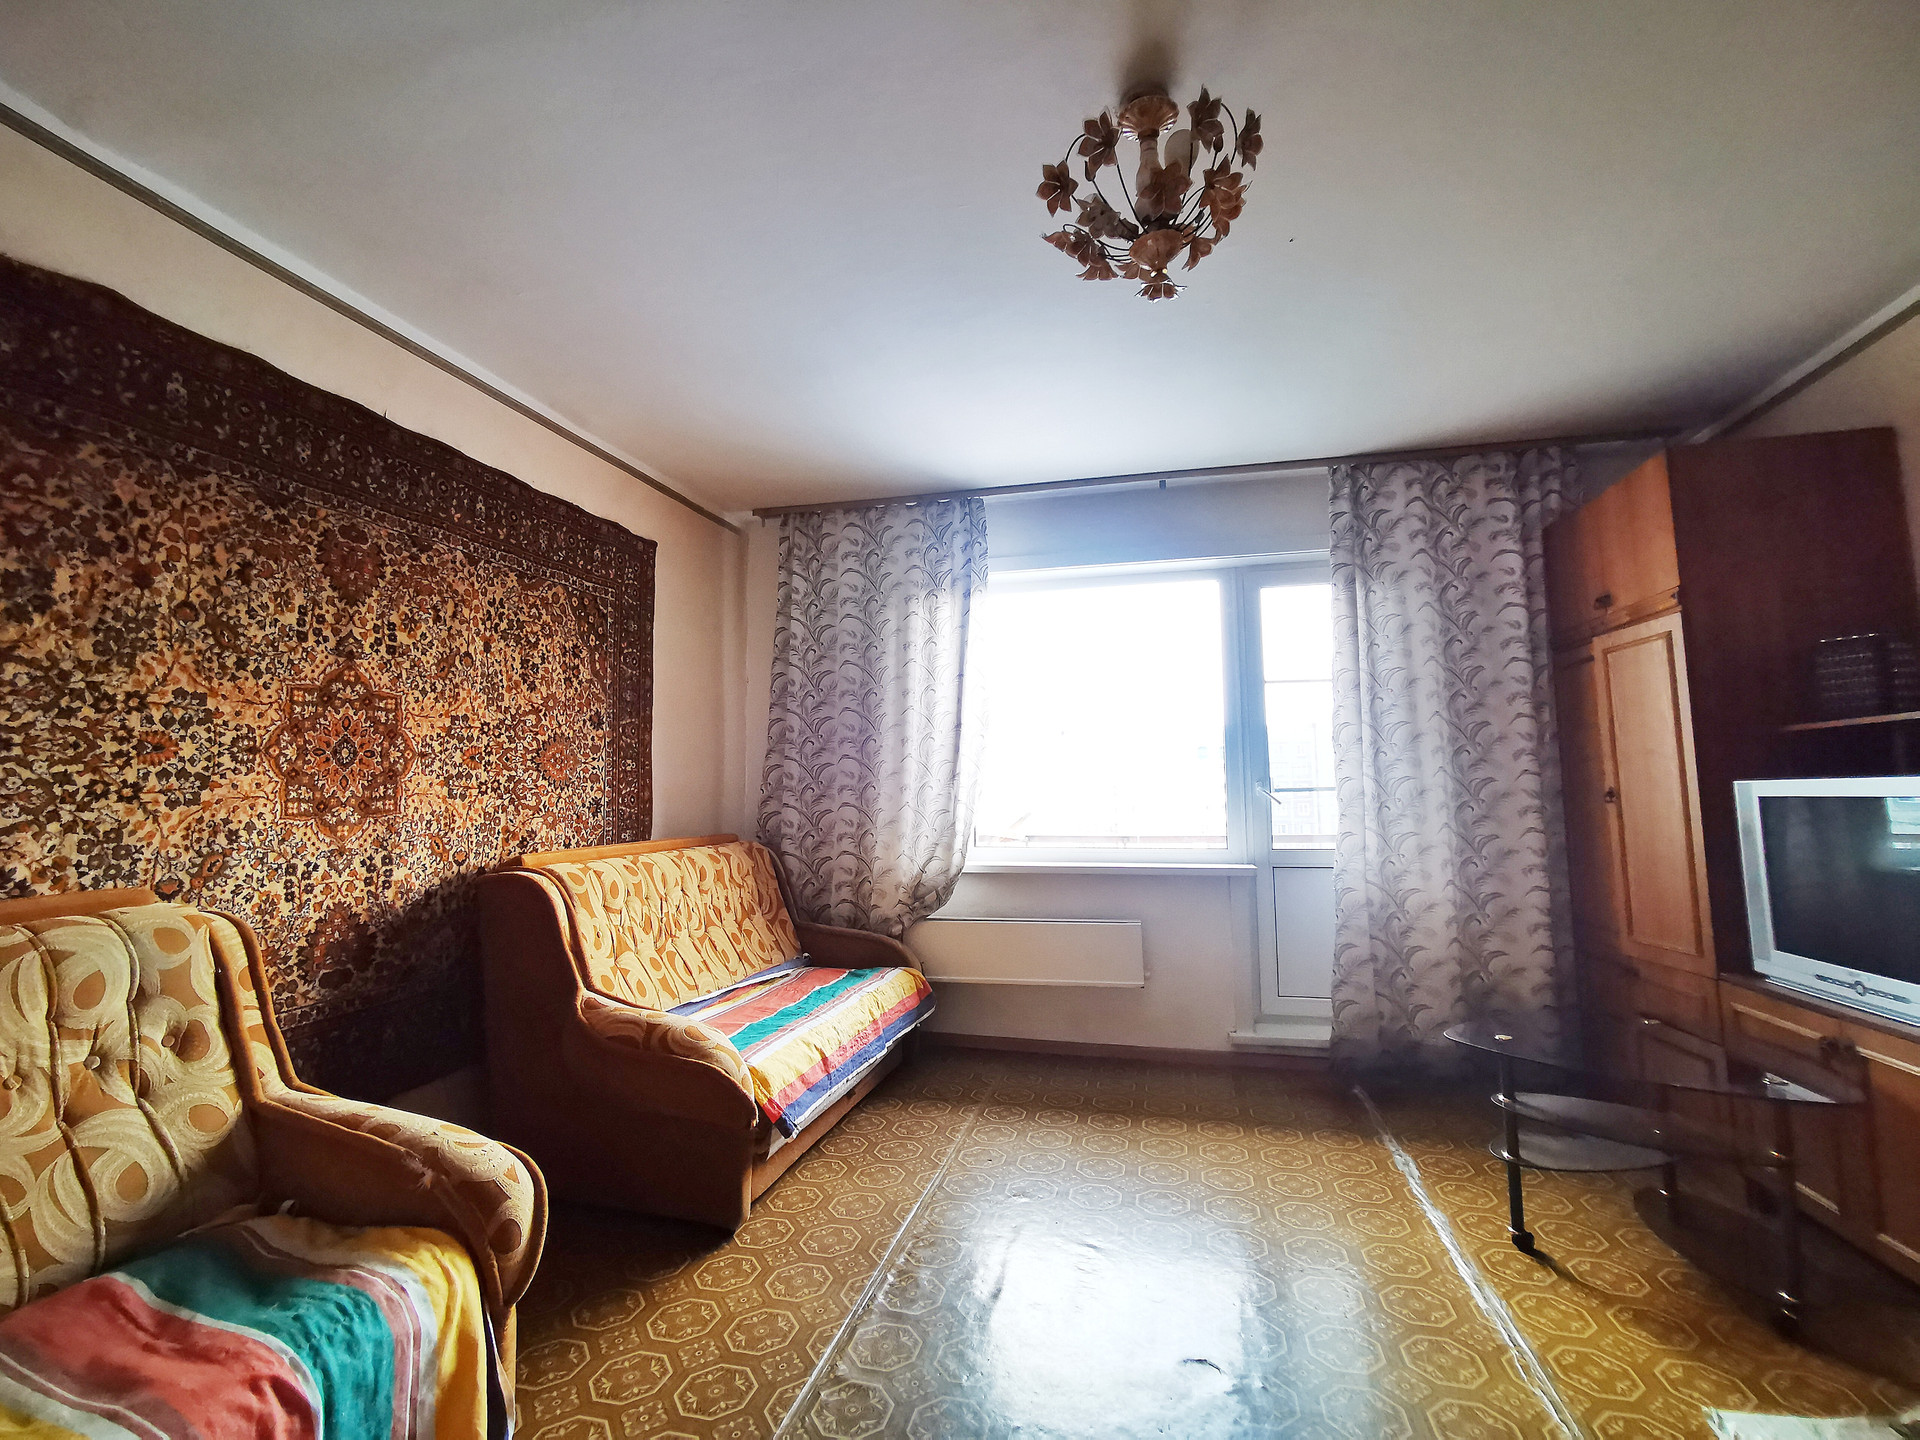 4 комнатные квартиры новокузнецк